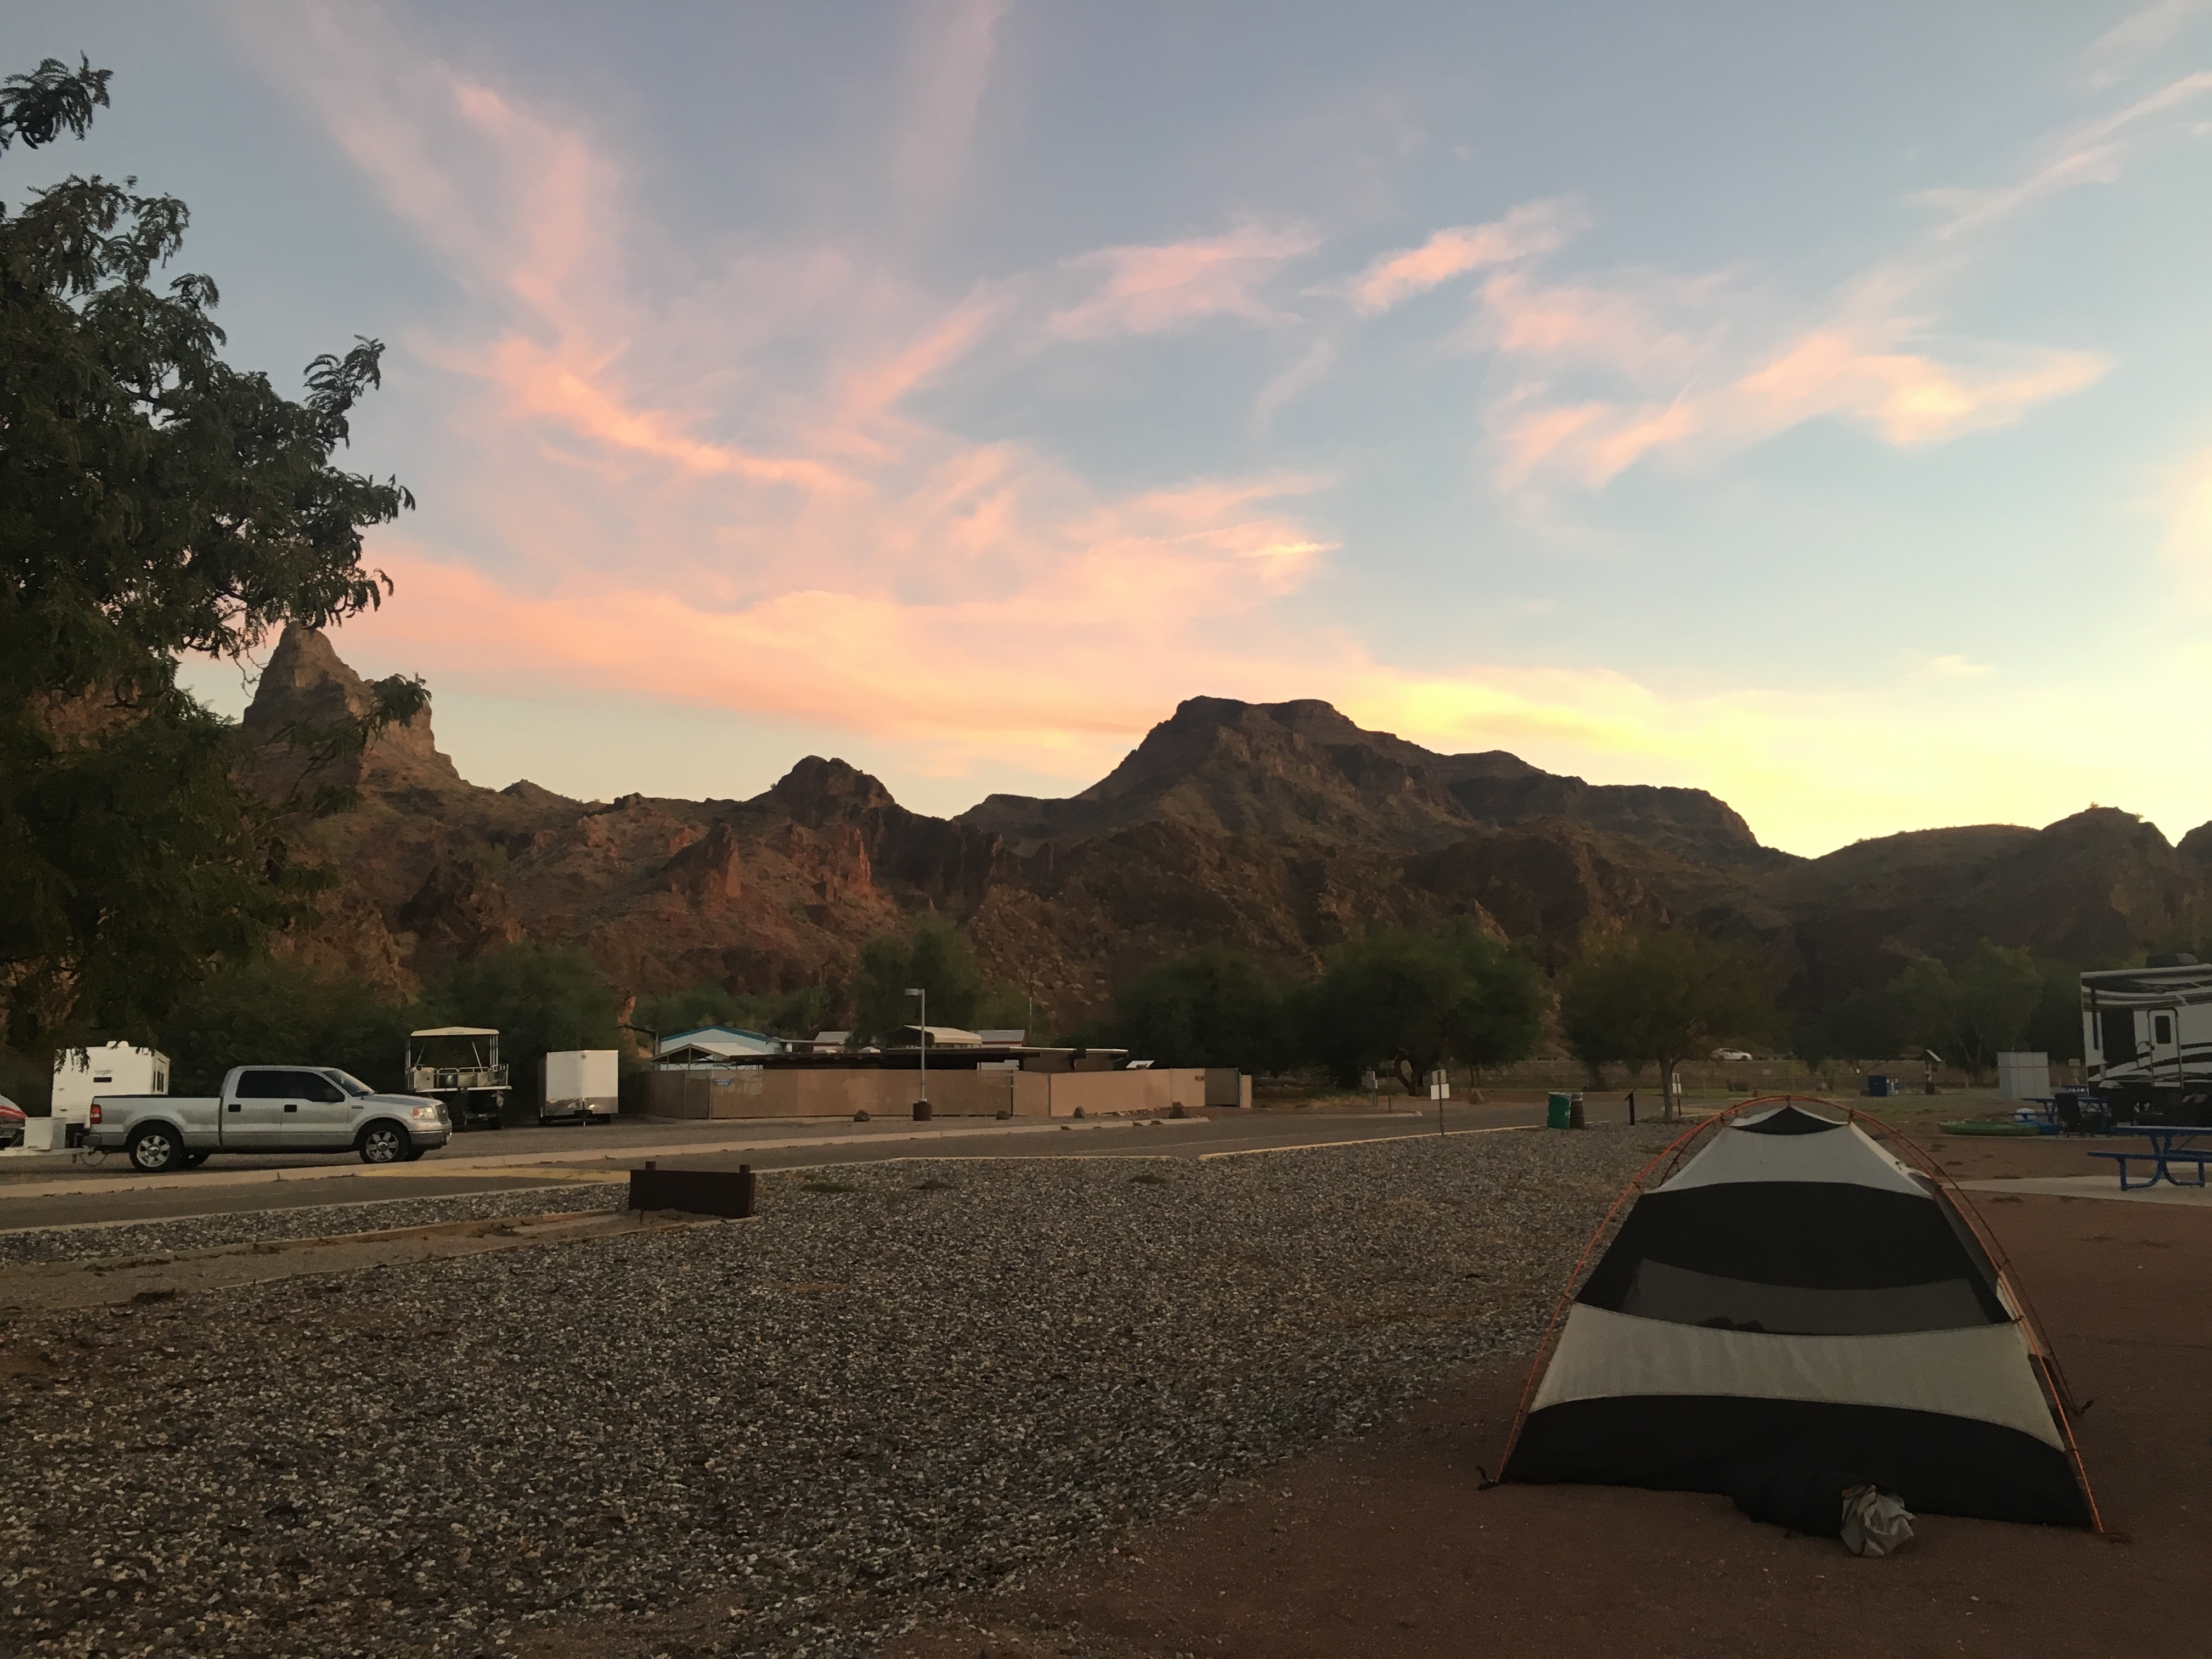 Sunset on the campsite in Arizona